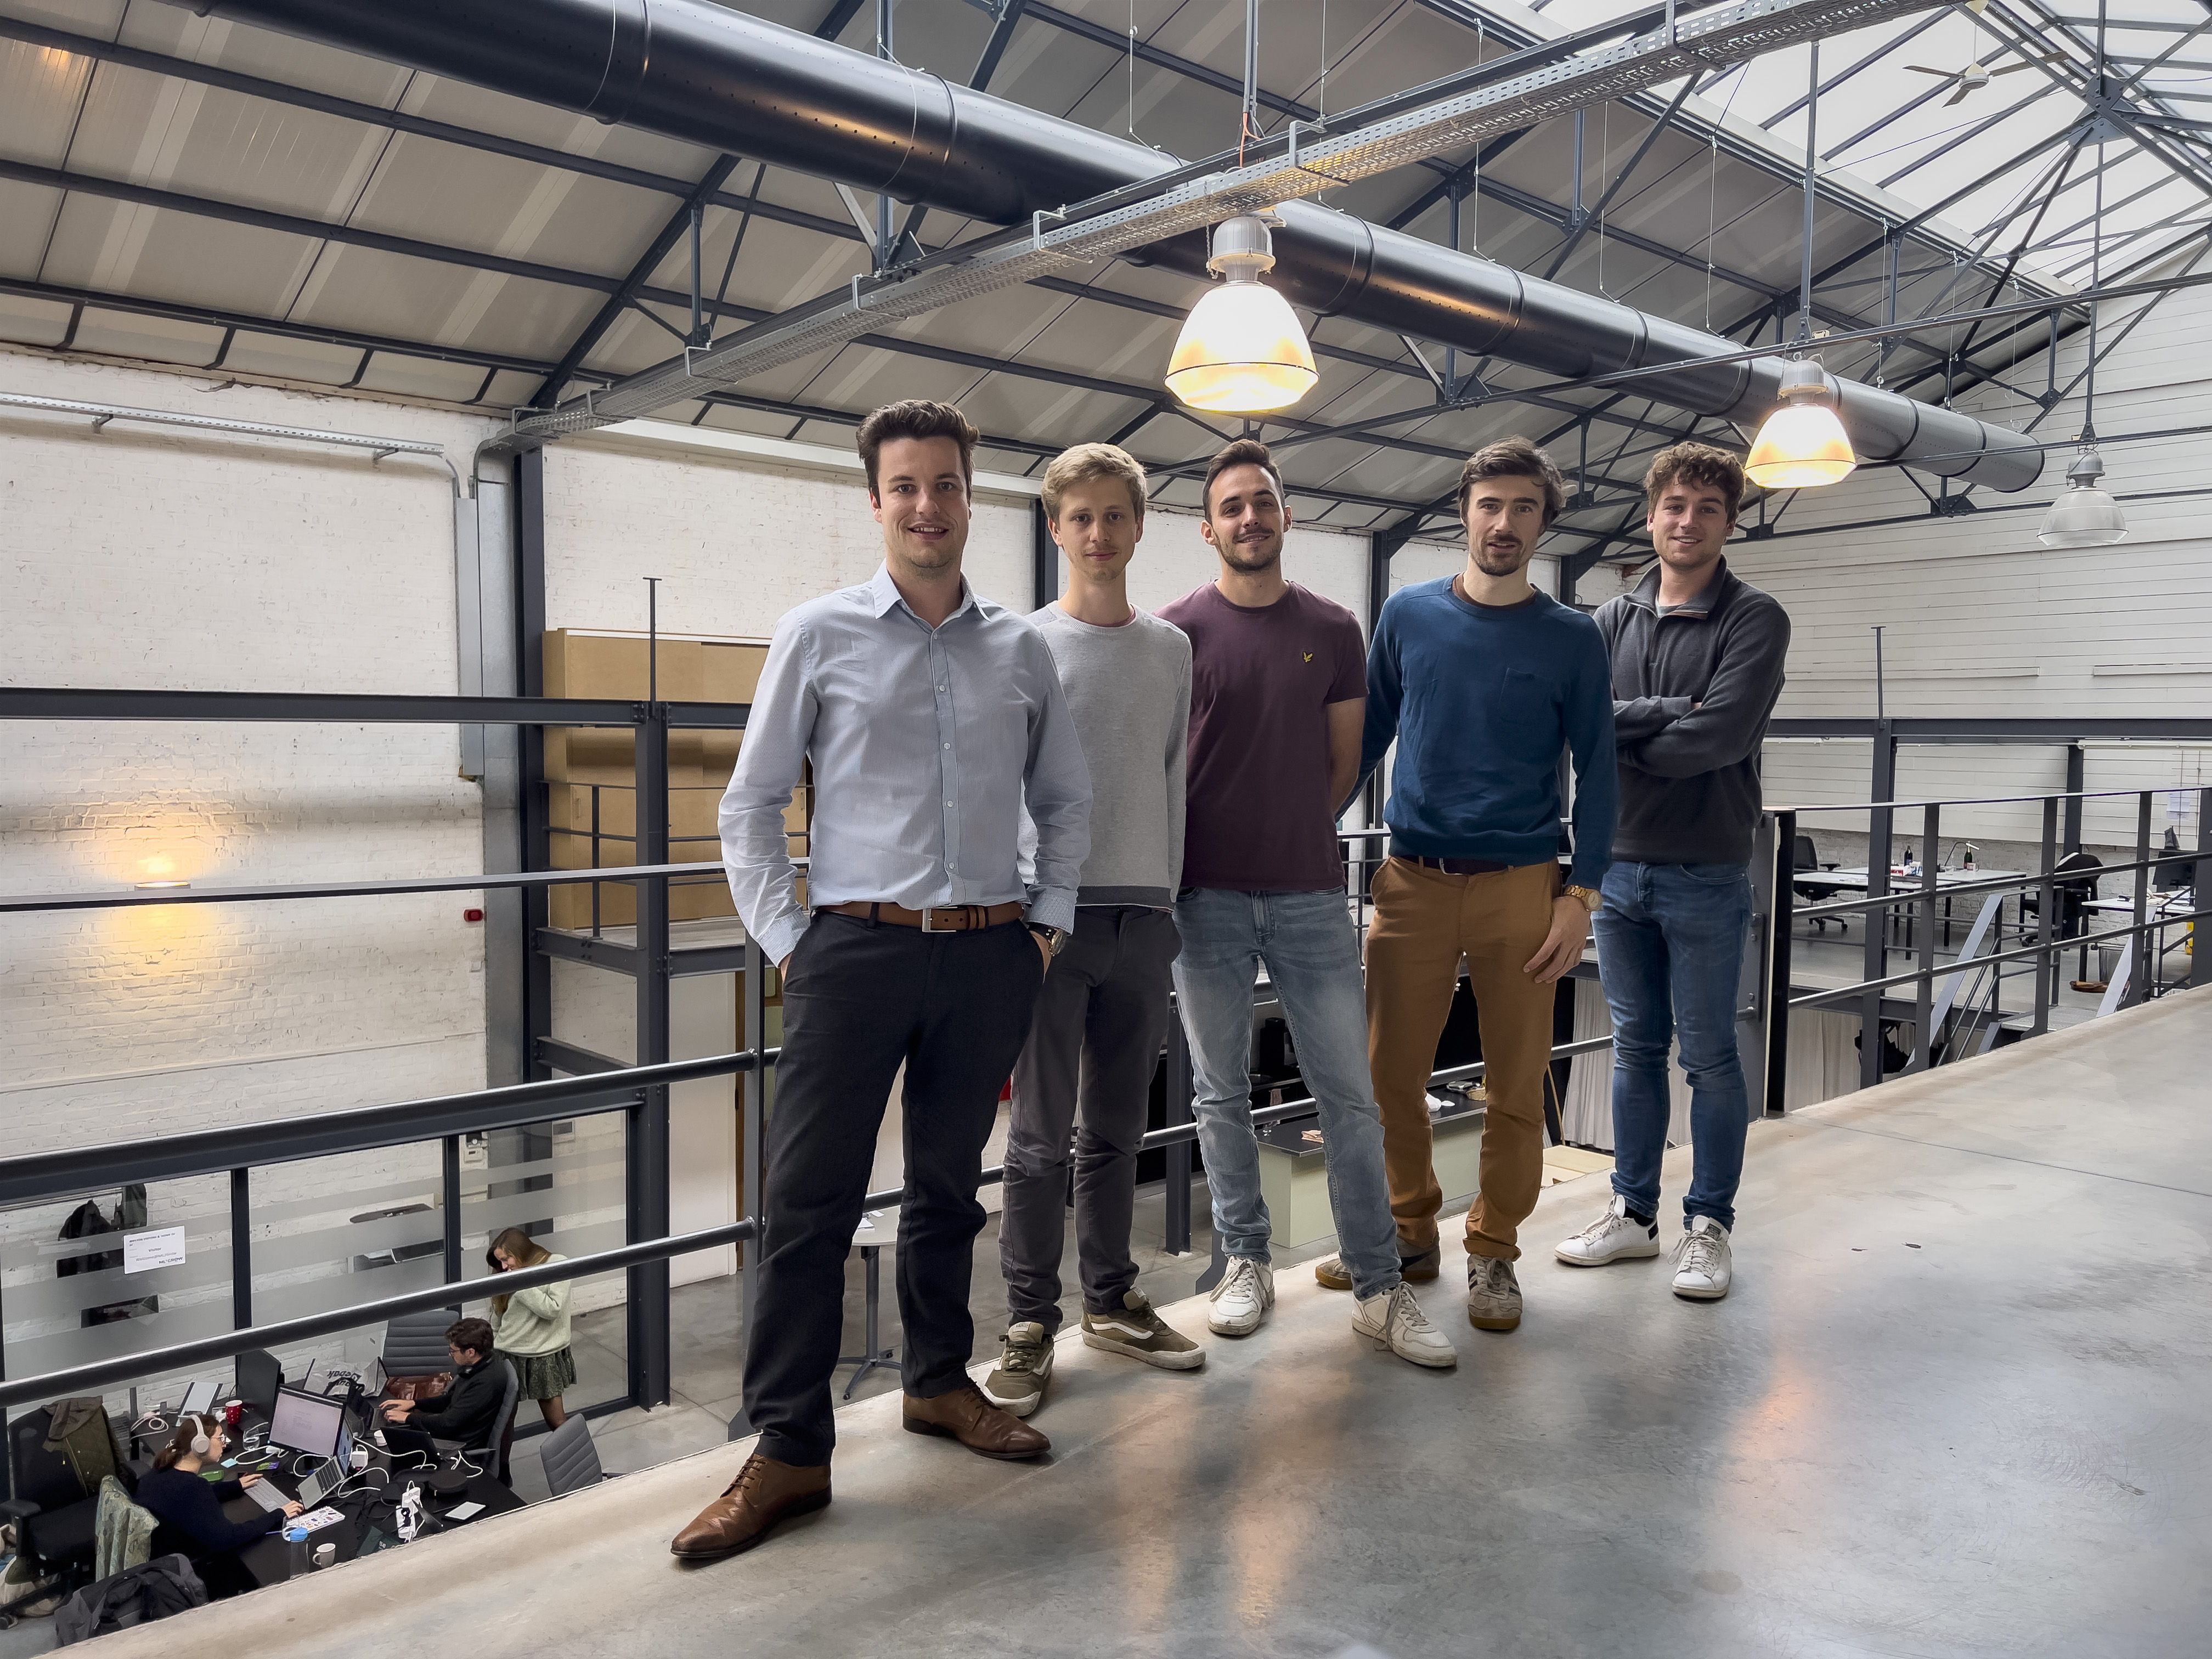 From left to right: Joeri Tulkens, Maxime Mattelin, Tanguy Sanglet, Maarten Van den Bulcke, Brecht Dhuyvetters